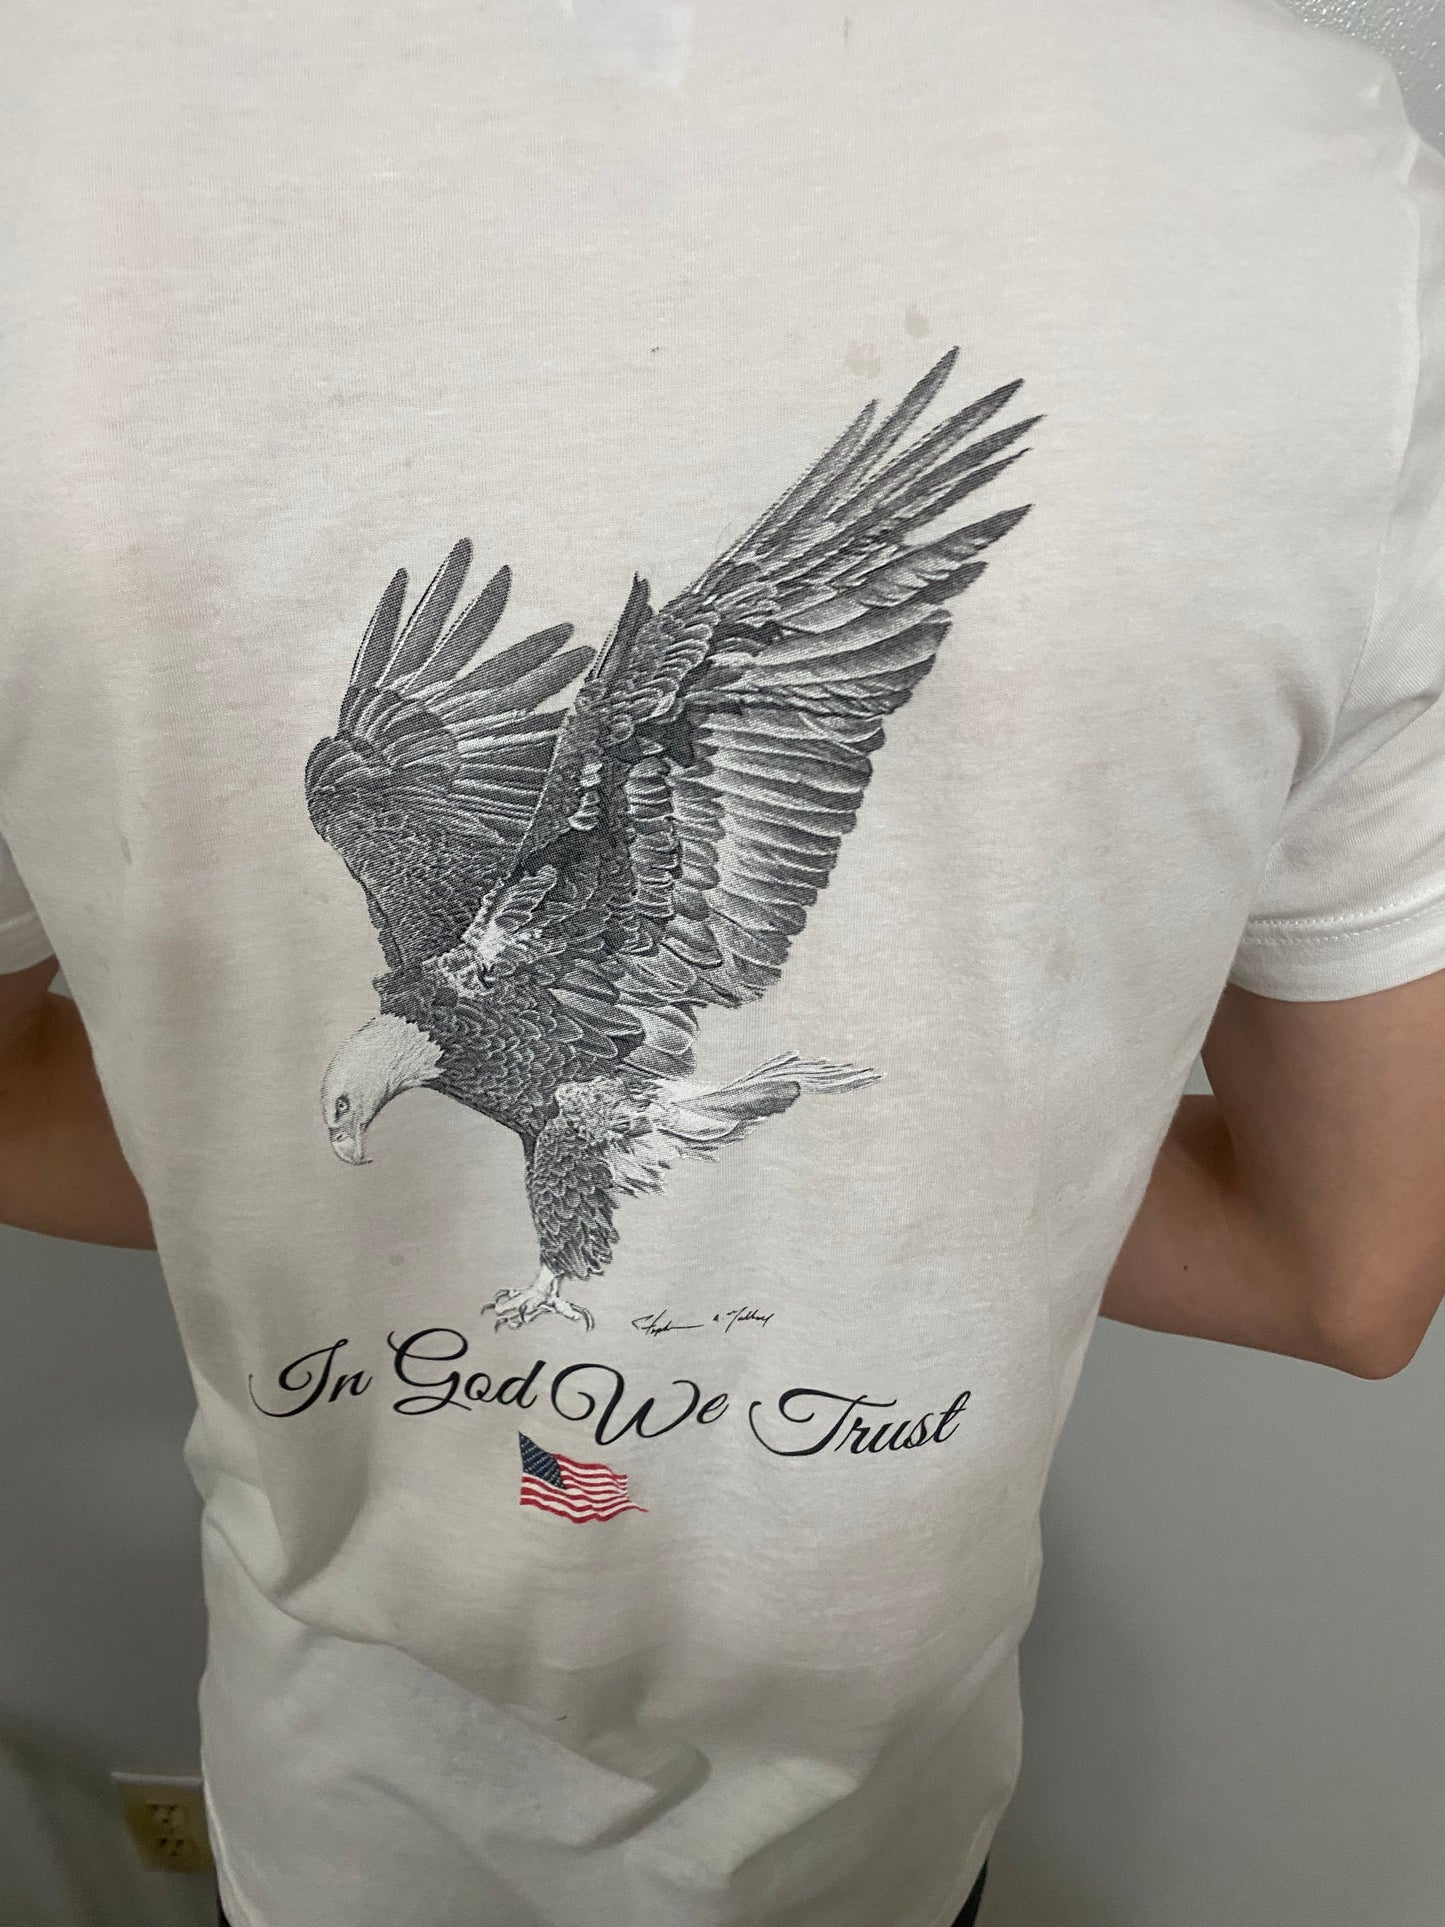 T-Shirt: In God We Trust